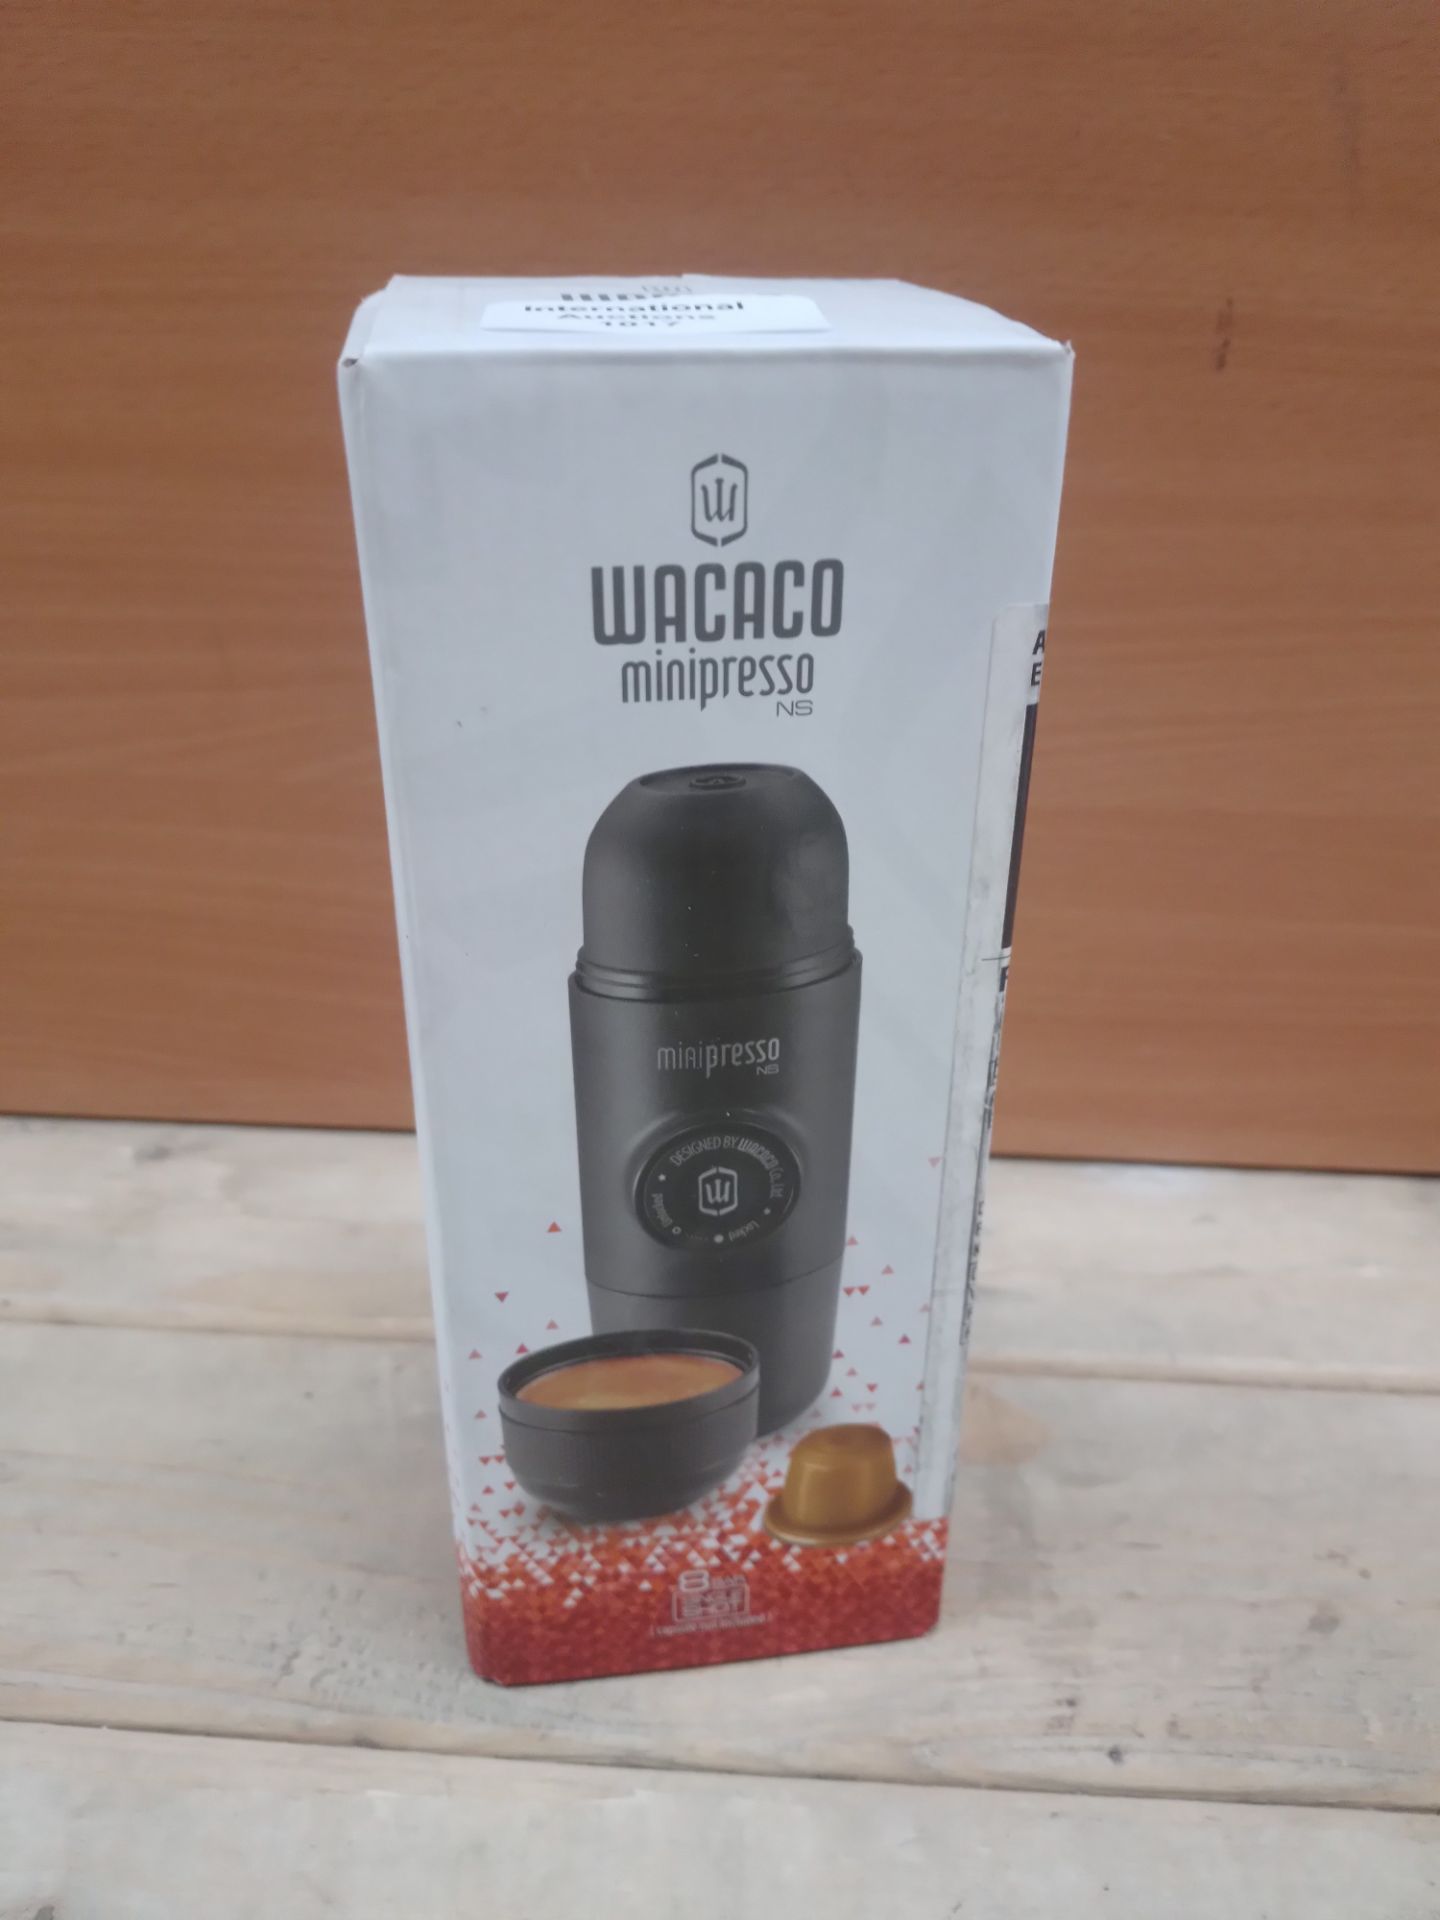 RRP £57.29 WACACO Minipresso NS - Image 2 of 2